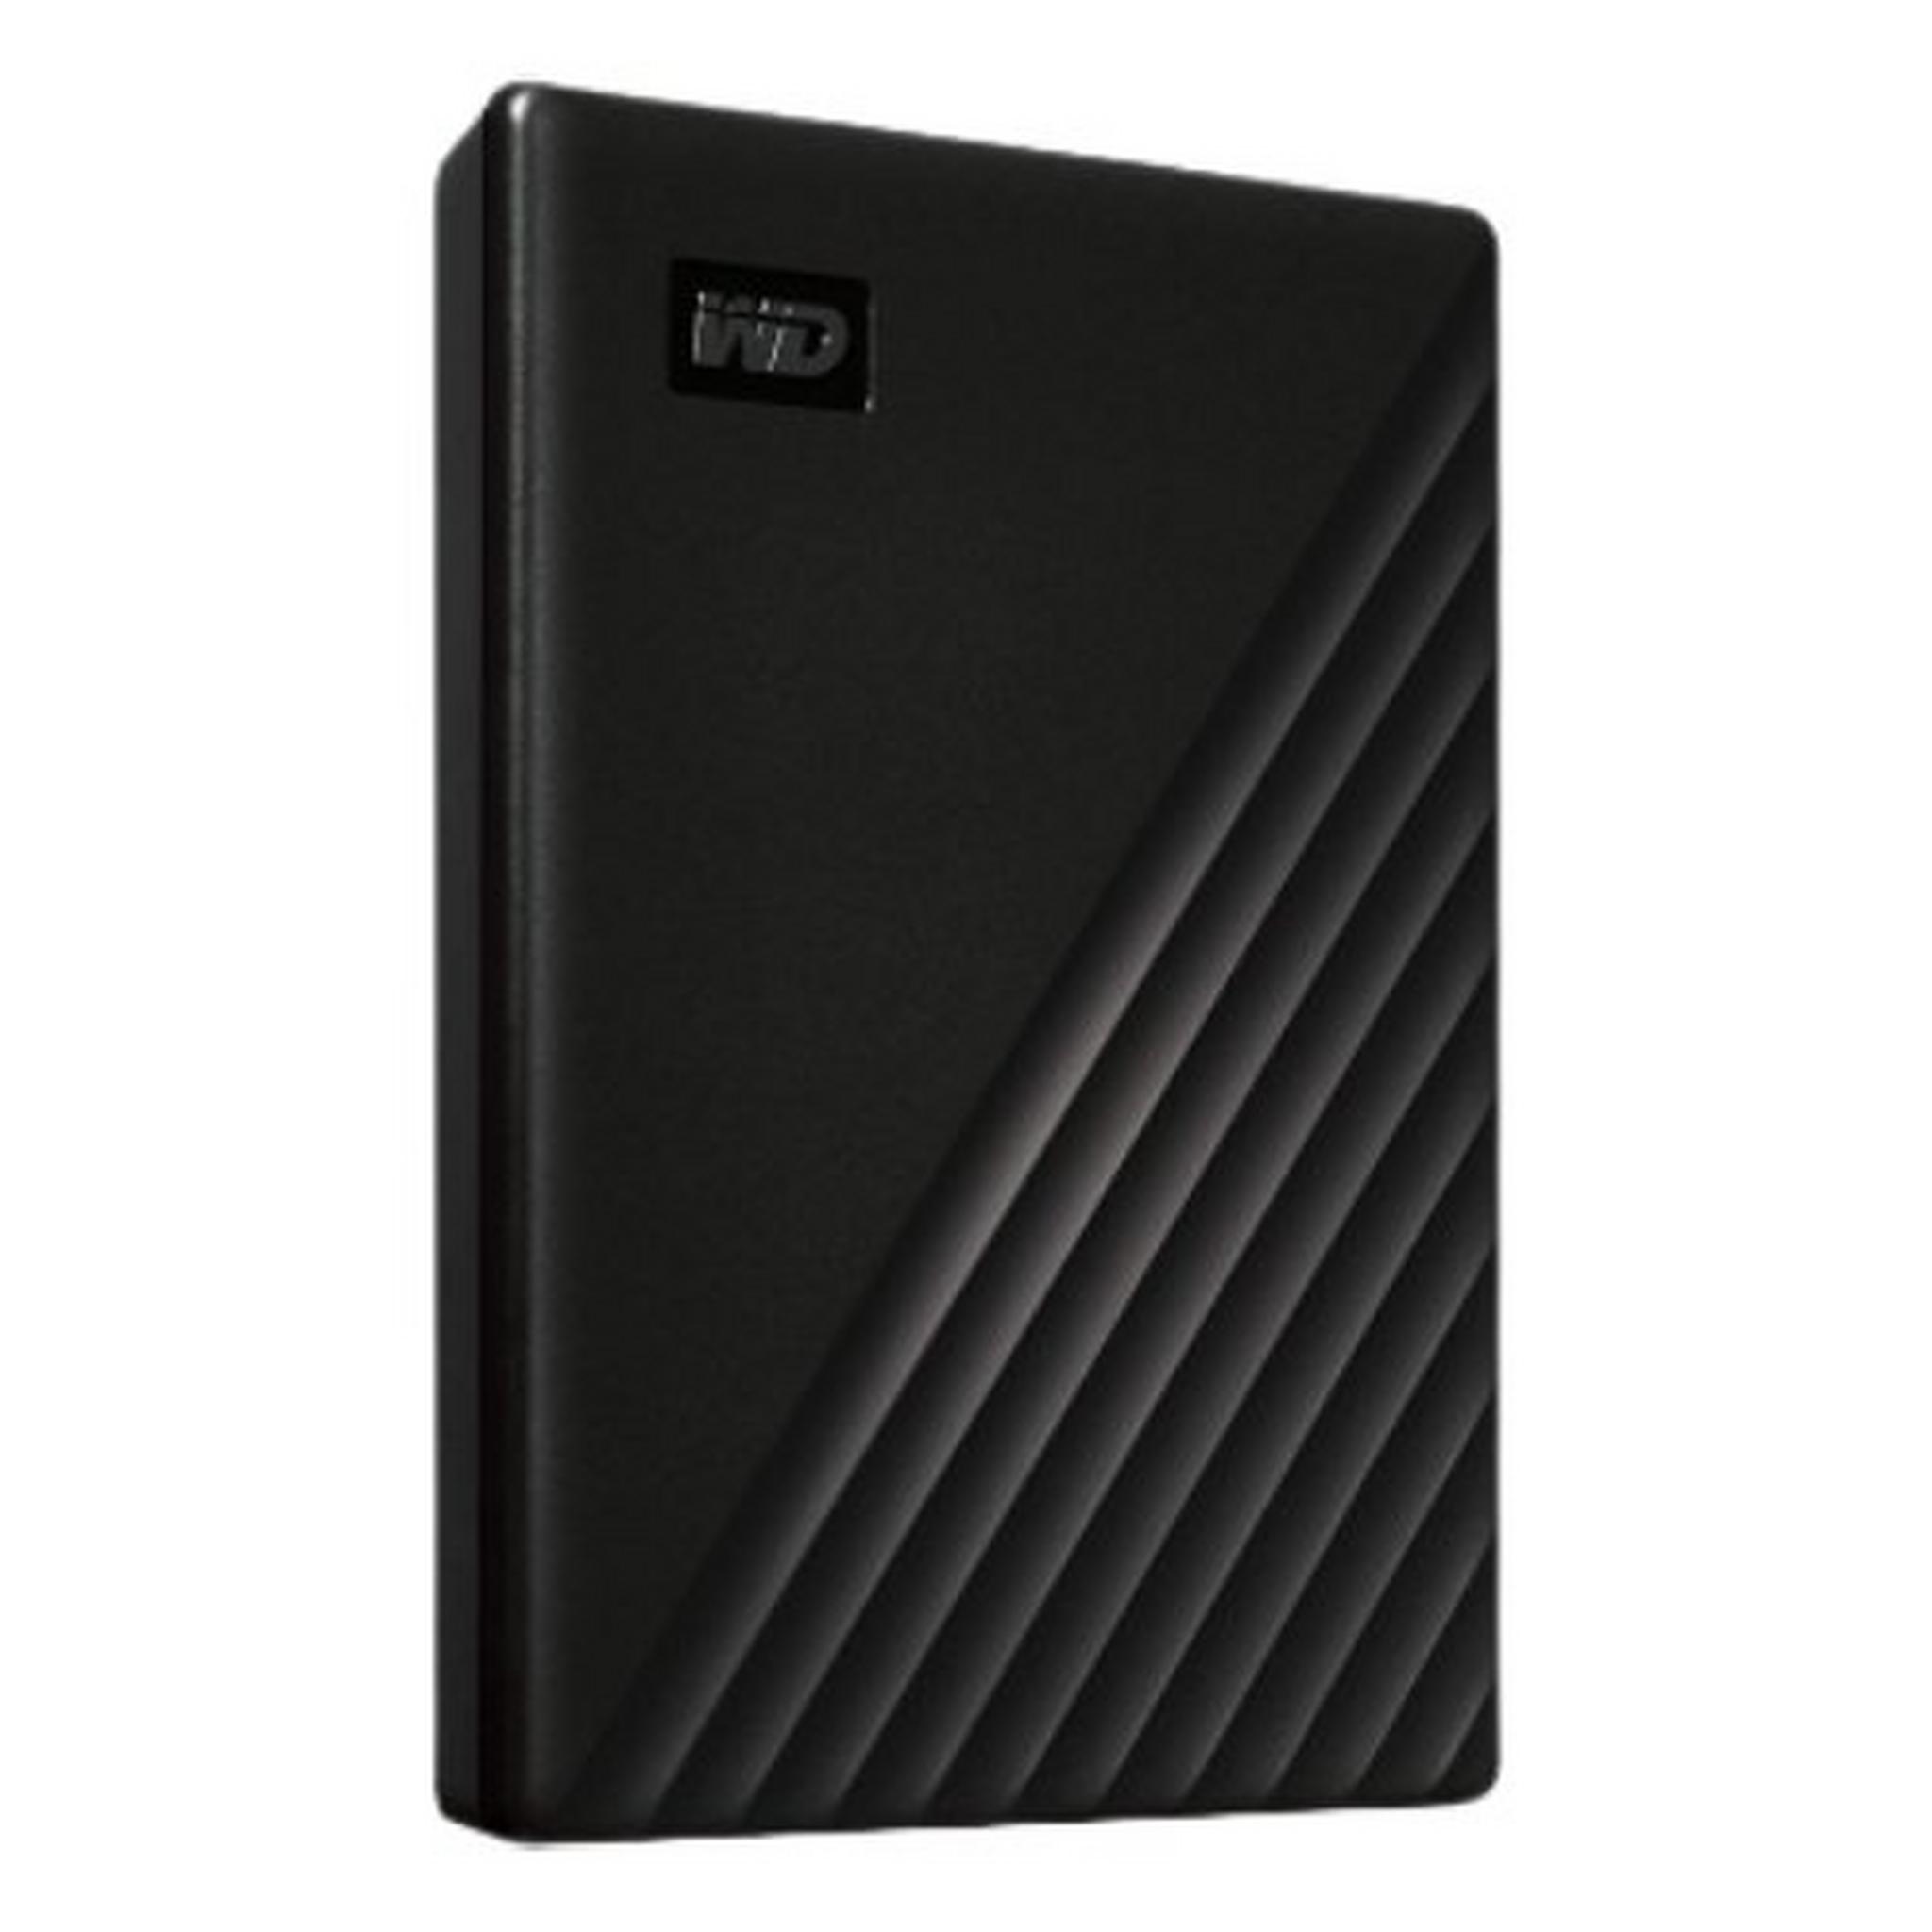 Western Digital My Passport 5TB Portable External Hard Drive - Black (WDBPKJ0050BBK-WESN)